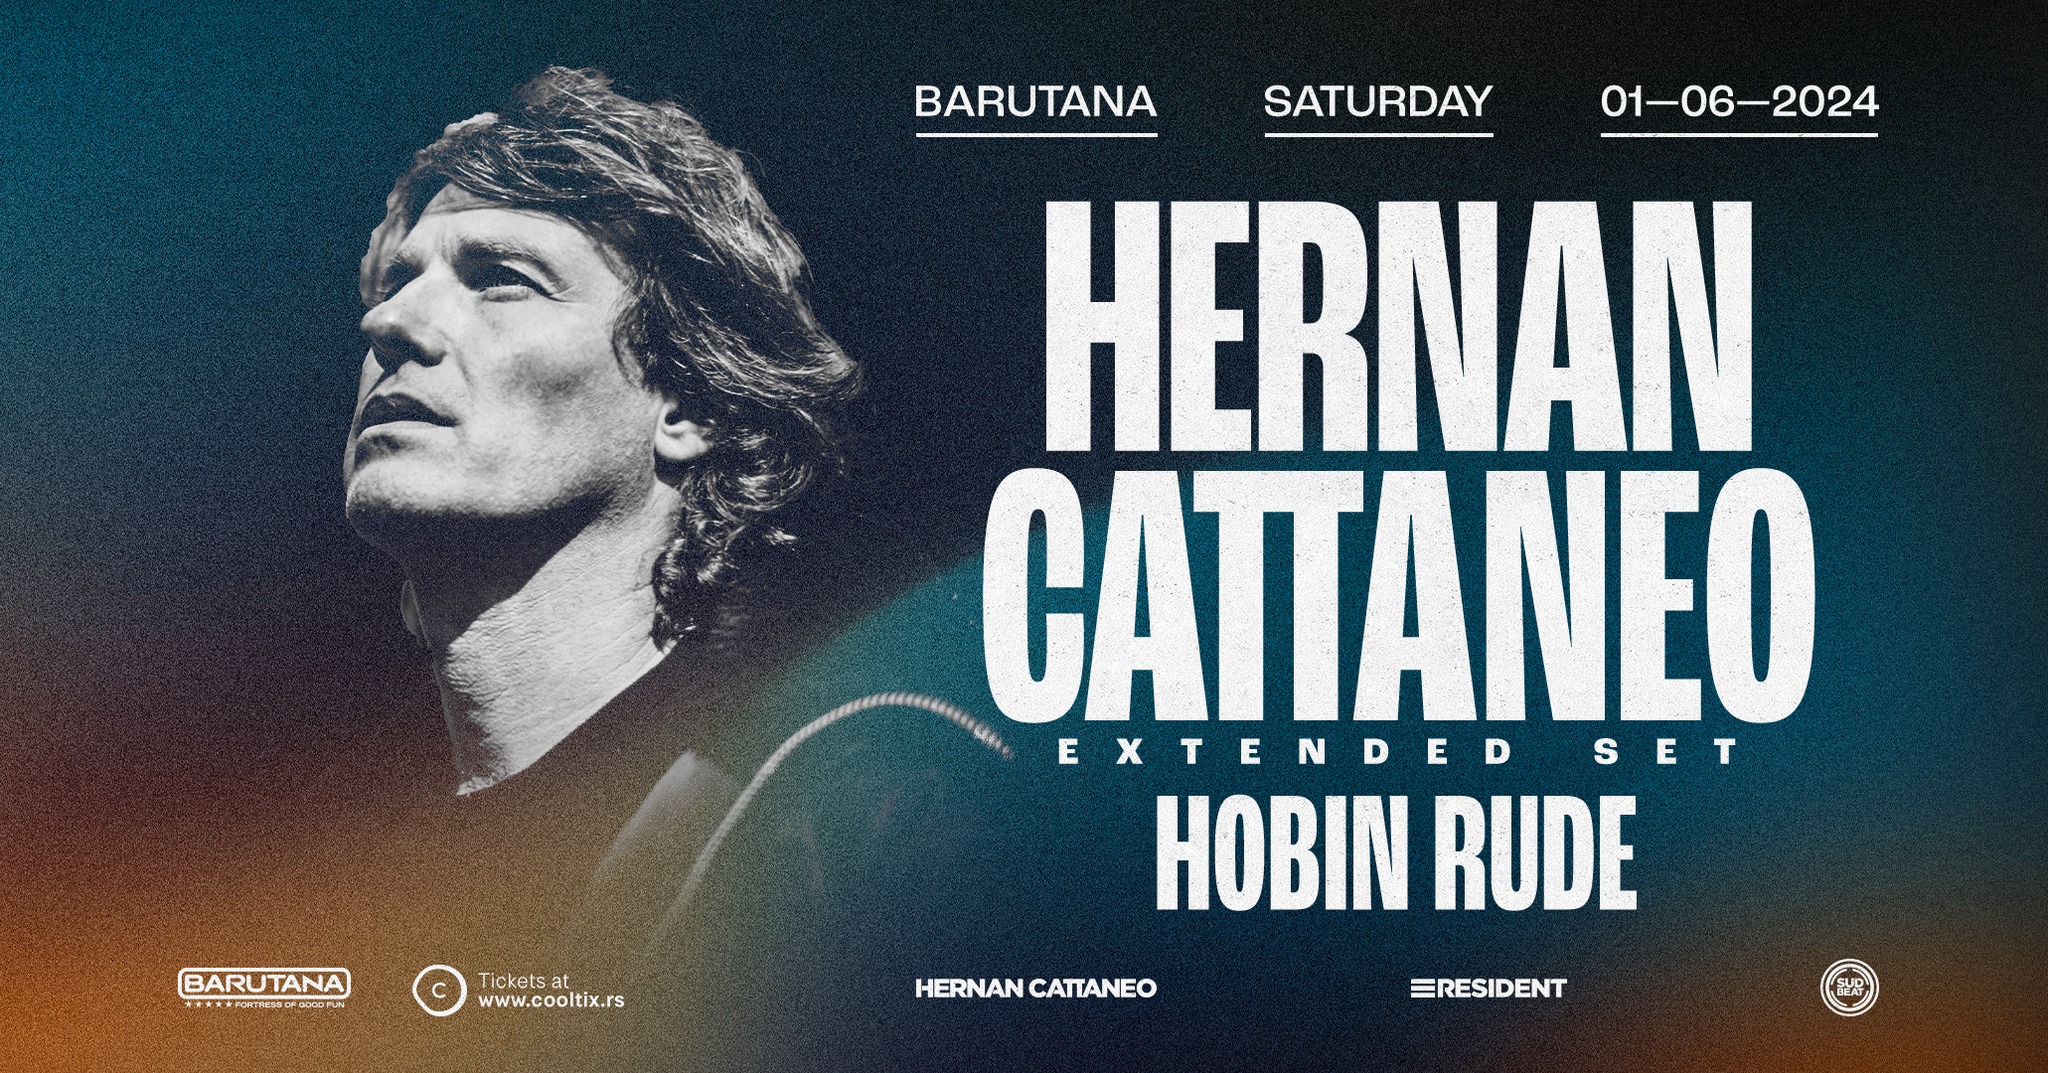 Hernan Cattaneo 01.06.2024. Barutana